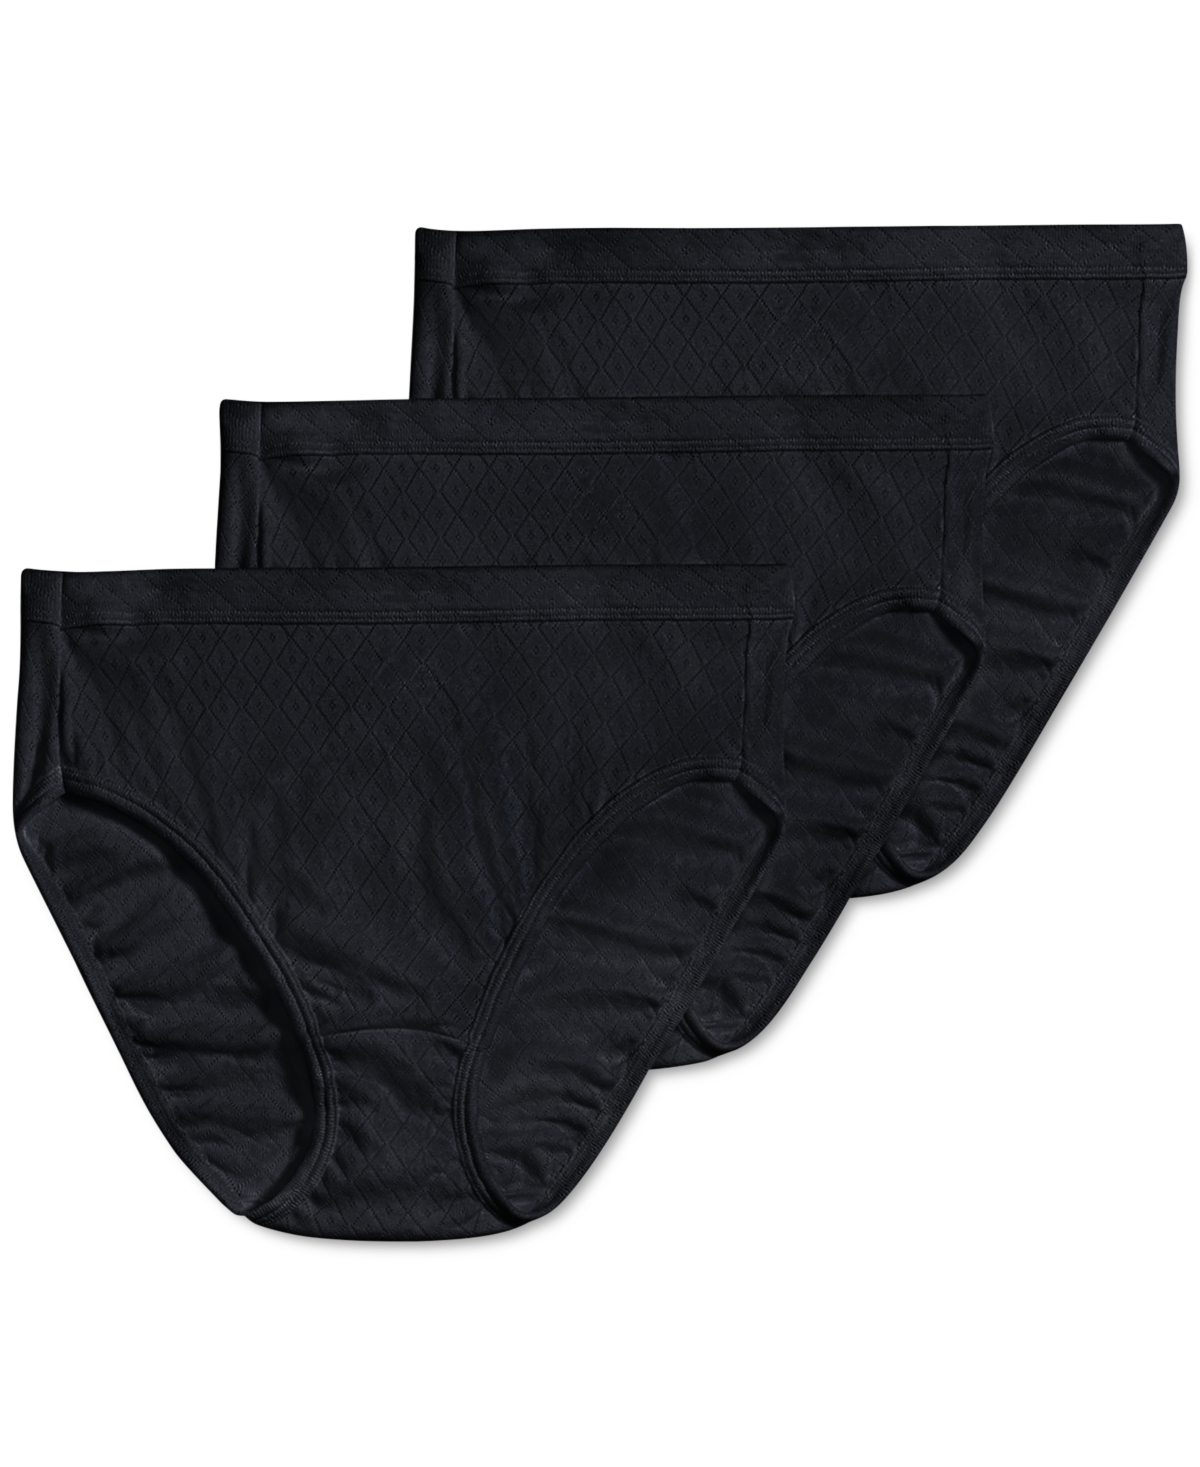 Elance Cotton French Cut Underwear 3-Pk 1541, Extended Sizes - Sheer Nude/Whisper Stripe/Light